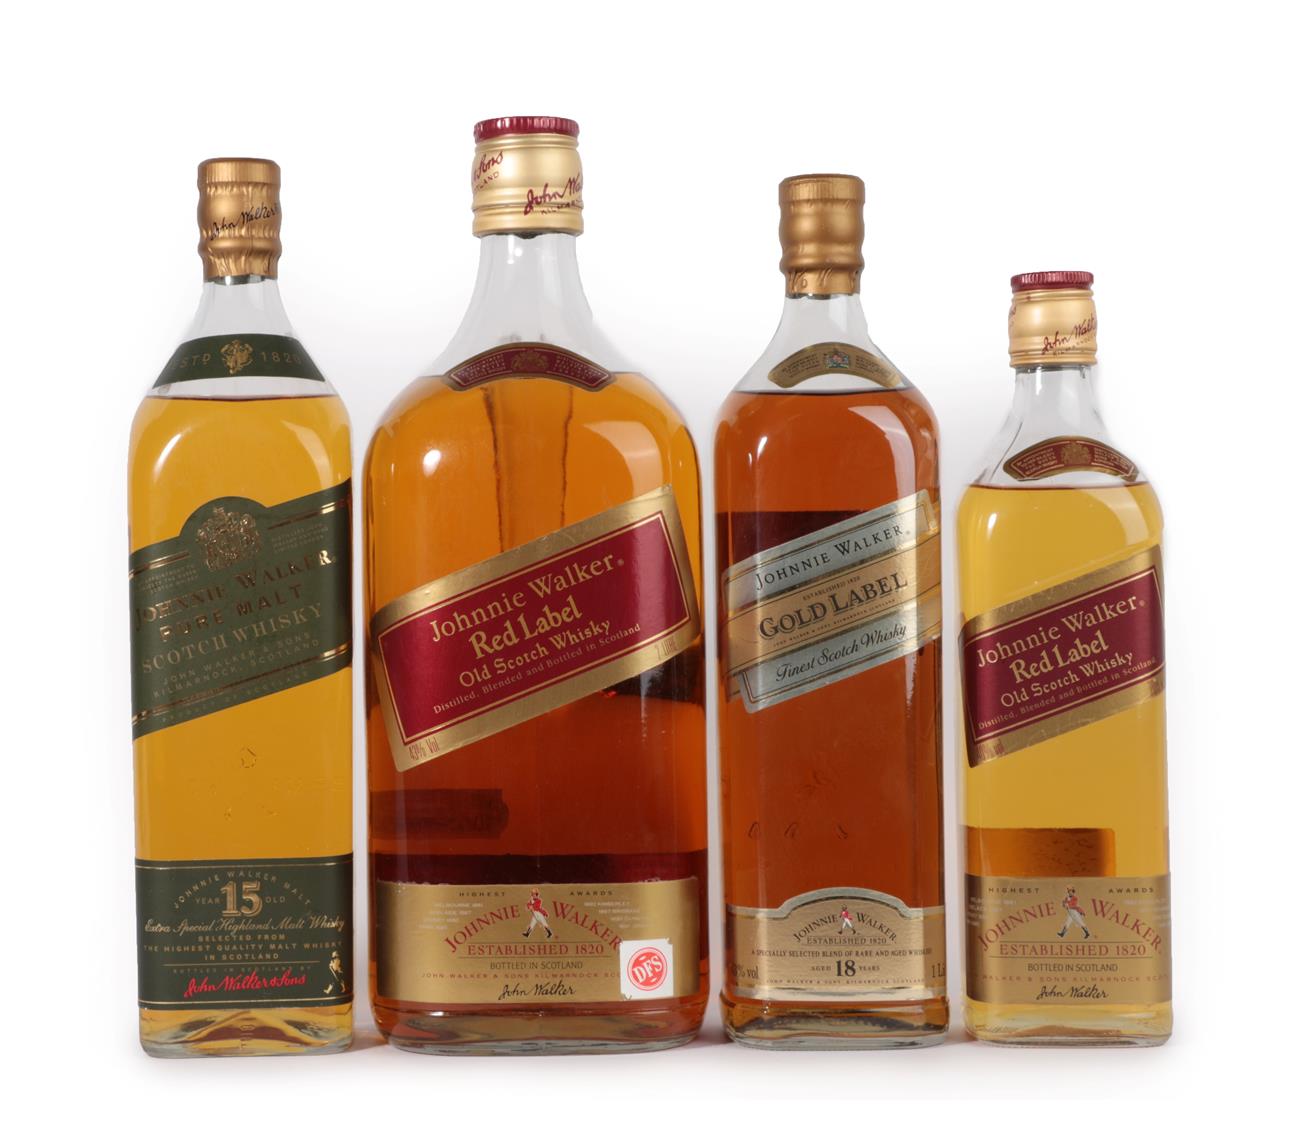 Johnnie Walker ''Swing'' Blended Scotch Whisky, 40% vol 75cl, in presentation bottle and original - Image 2 of 3